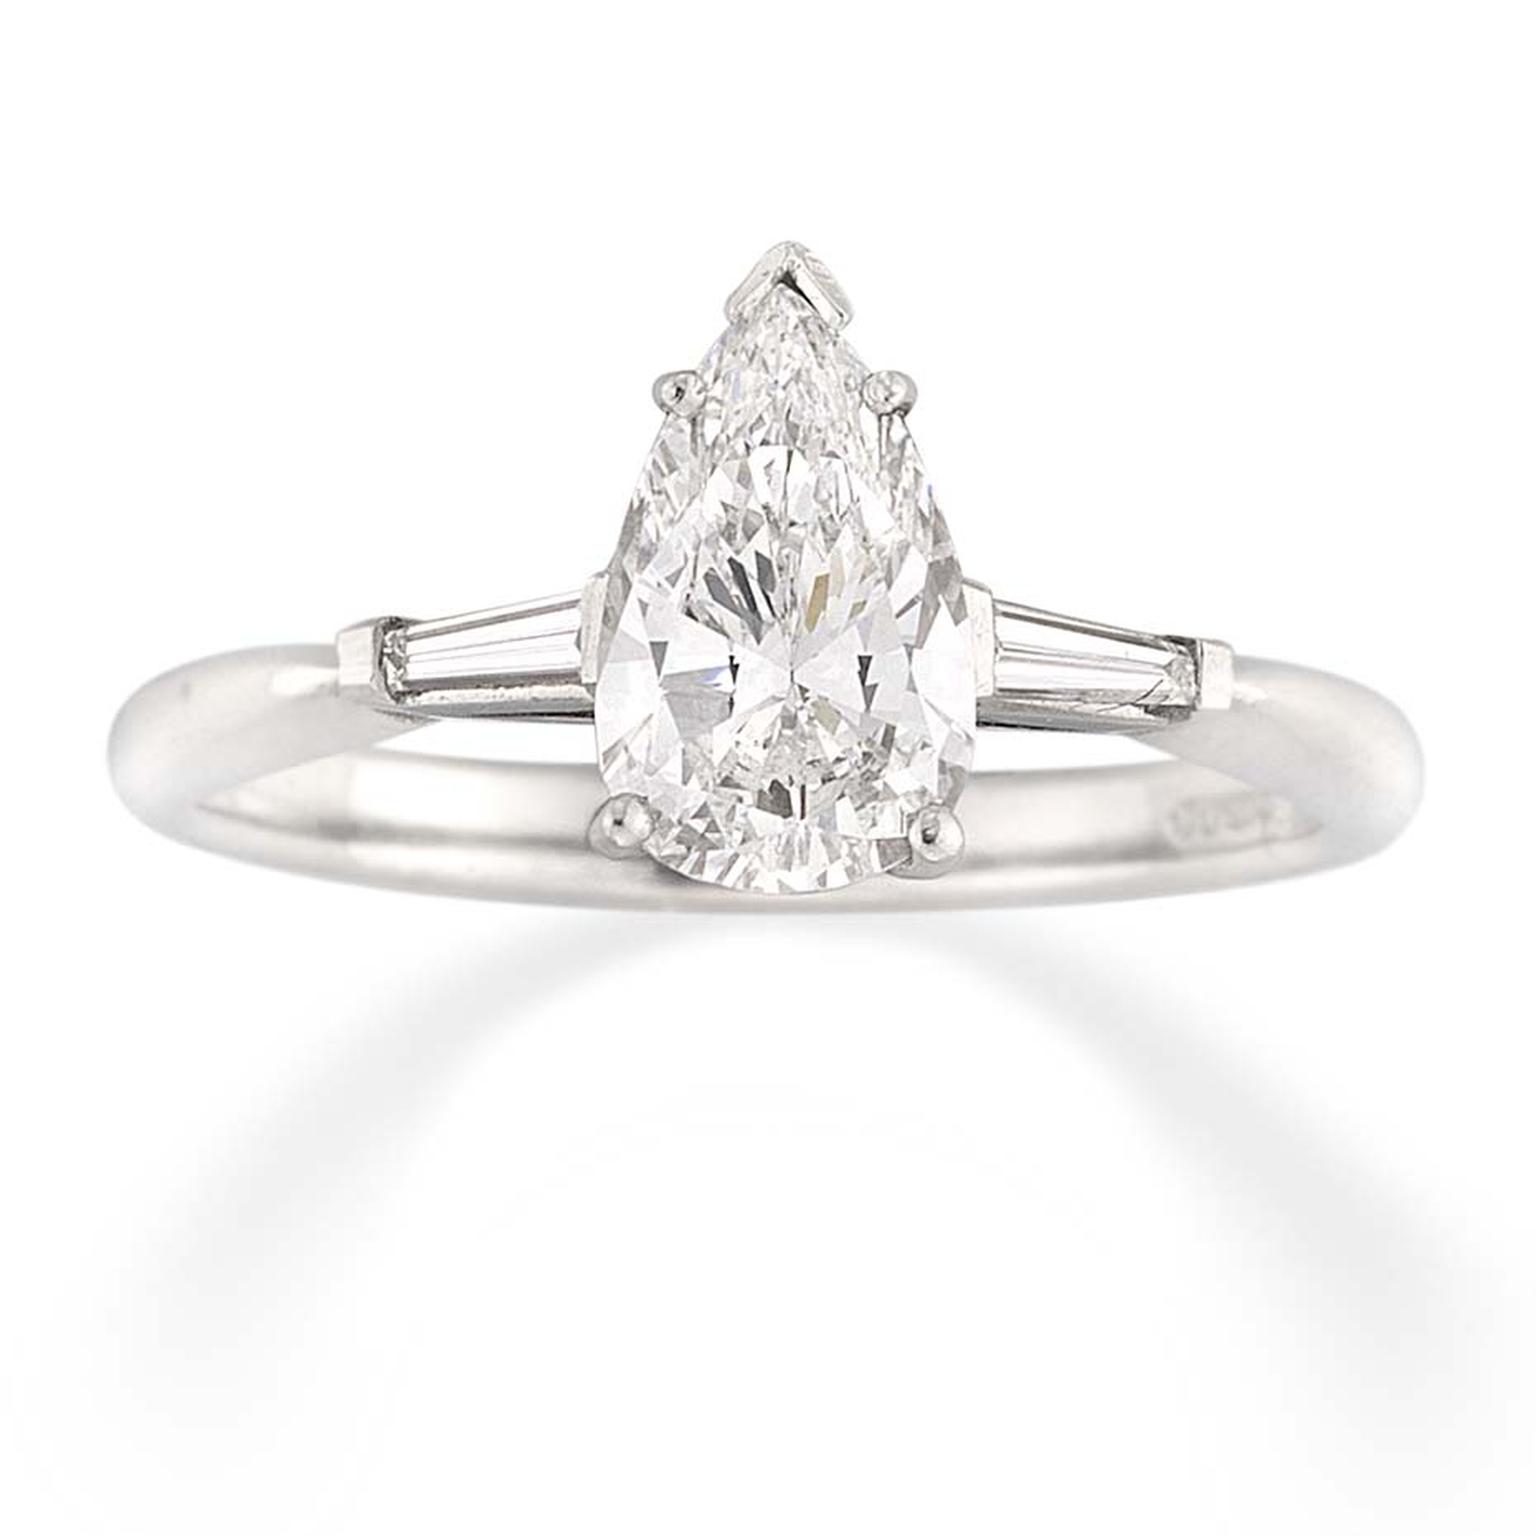 Bentley & Skinner single pear-cut diamond ring (£16,750.00).